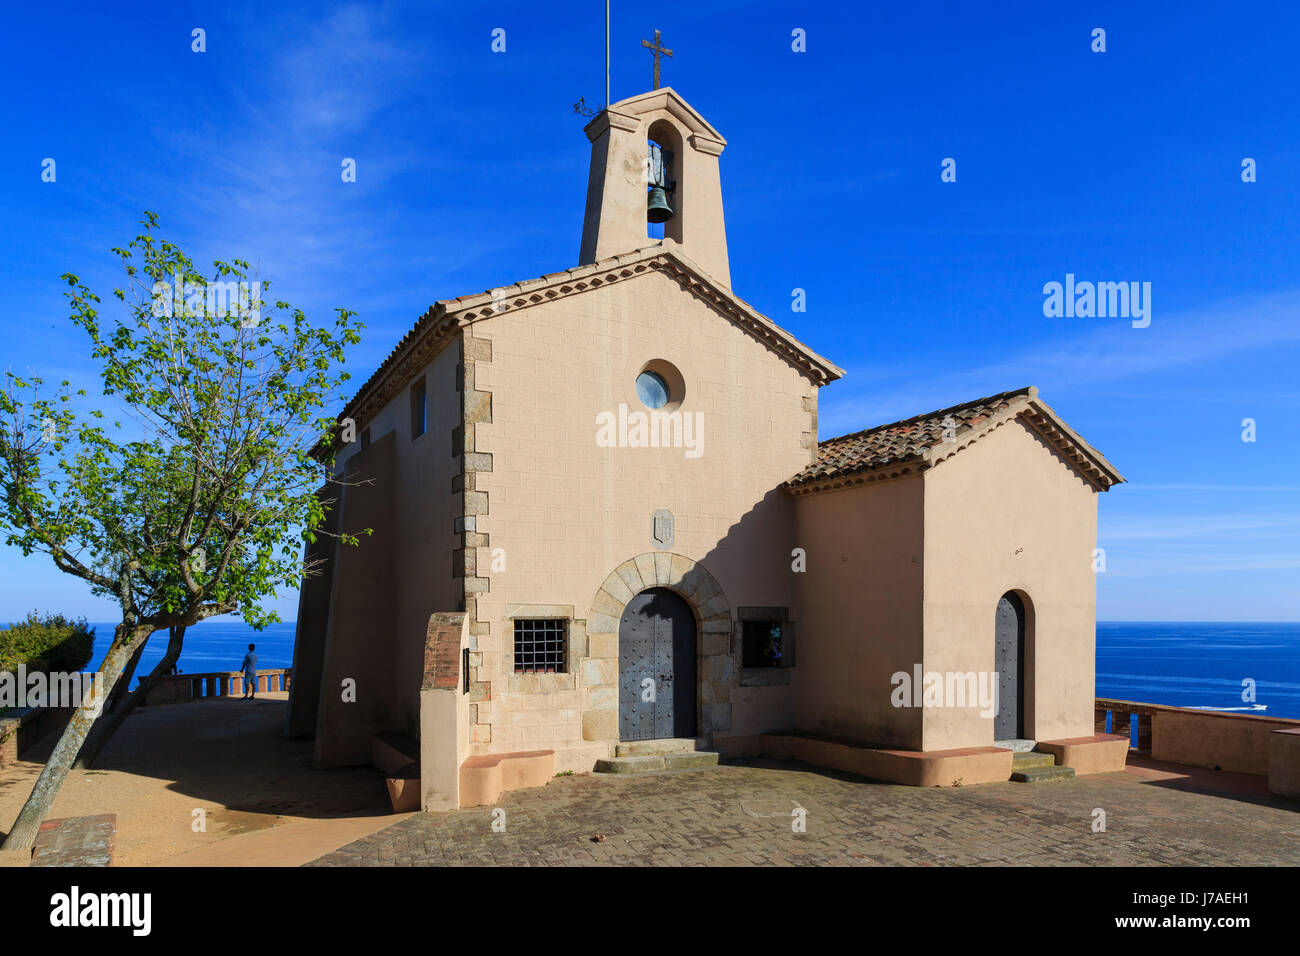 España, Cataluña, Costa Brava, Sant Feliu de Guíxols, capilla de Sant Elm, es desde este panorama que nació el apodo de Costa Brava Foto de stock